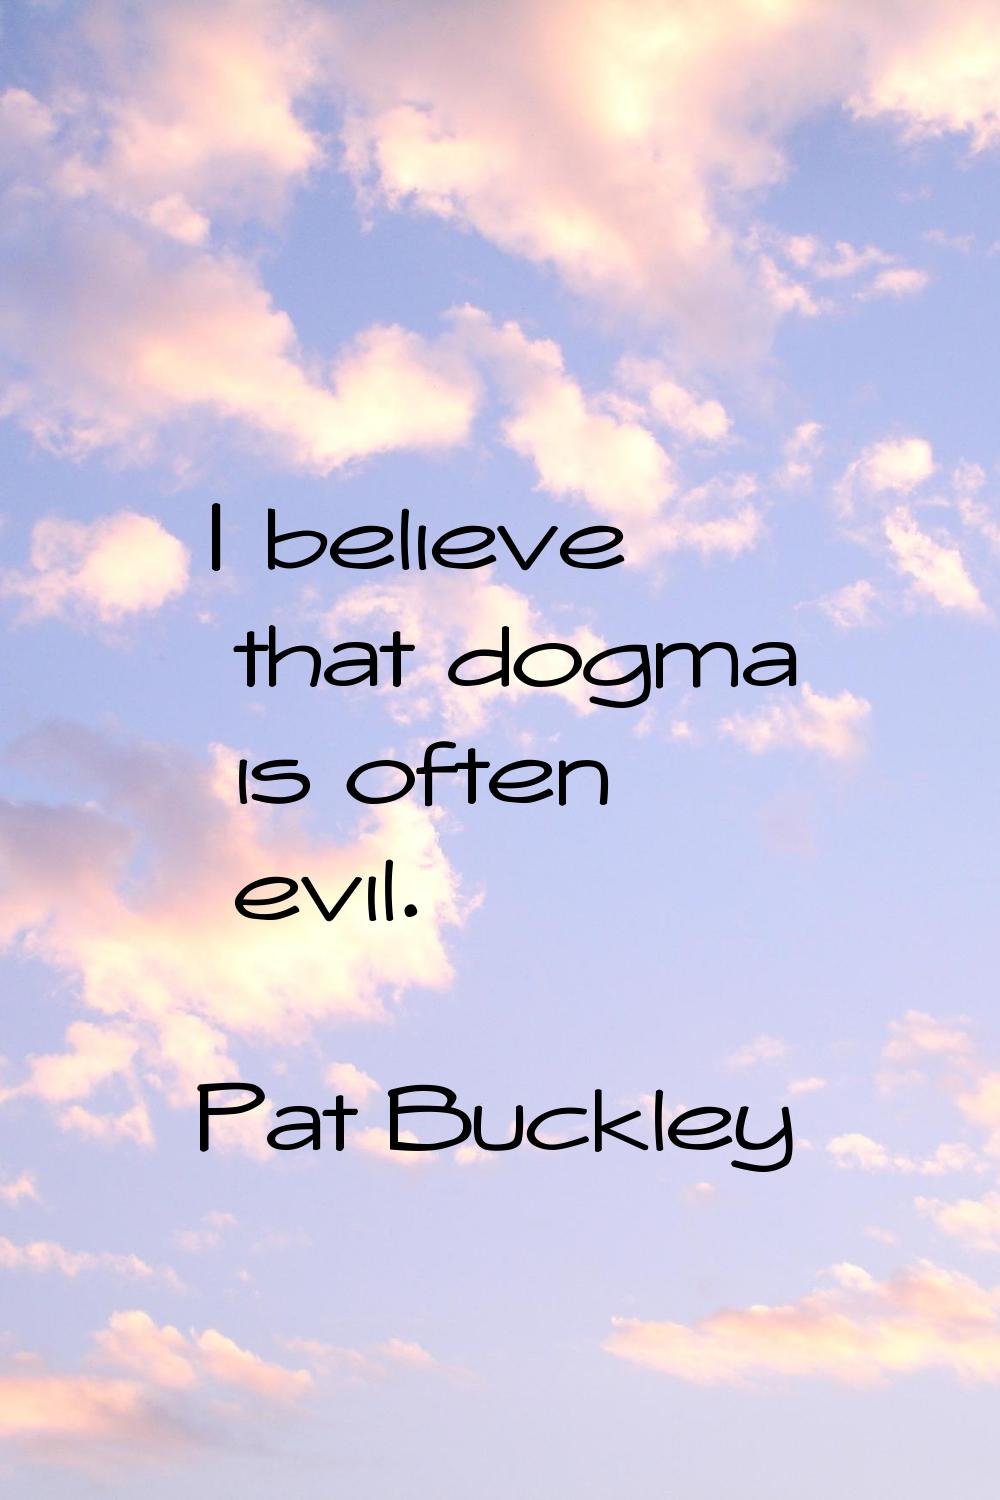 I believe that dogma is often evil.